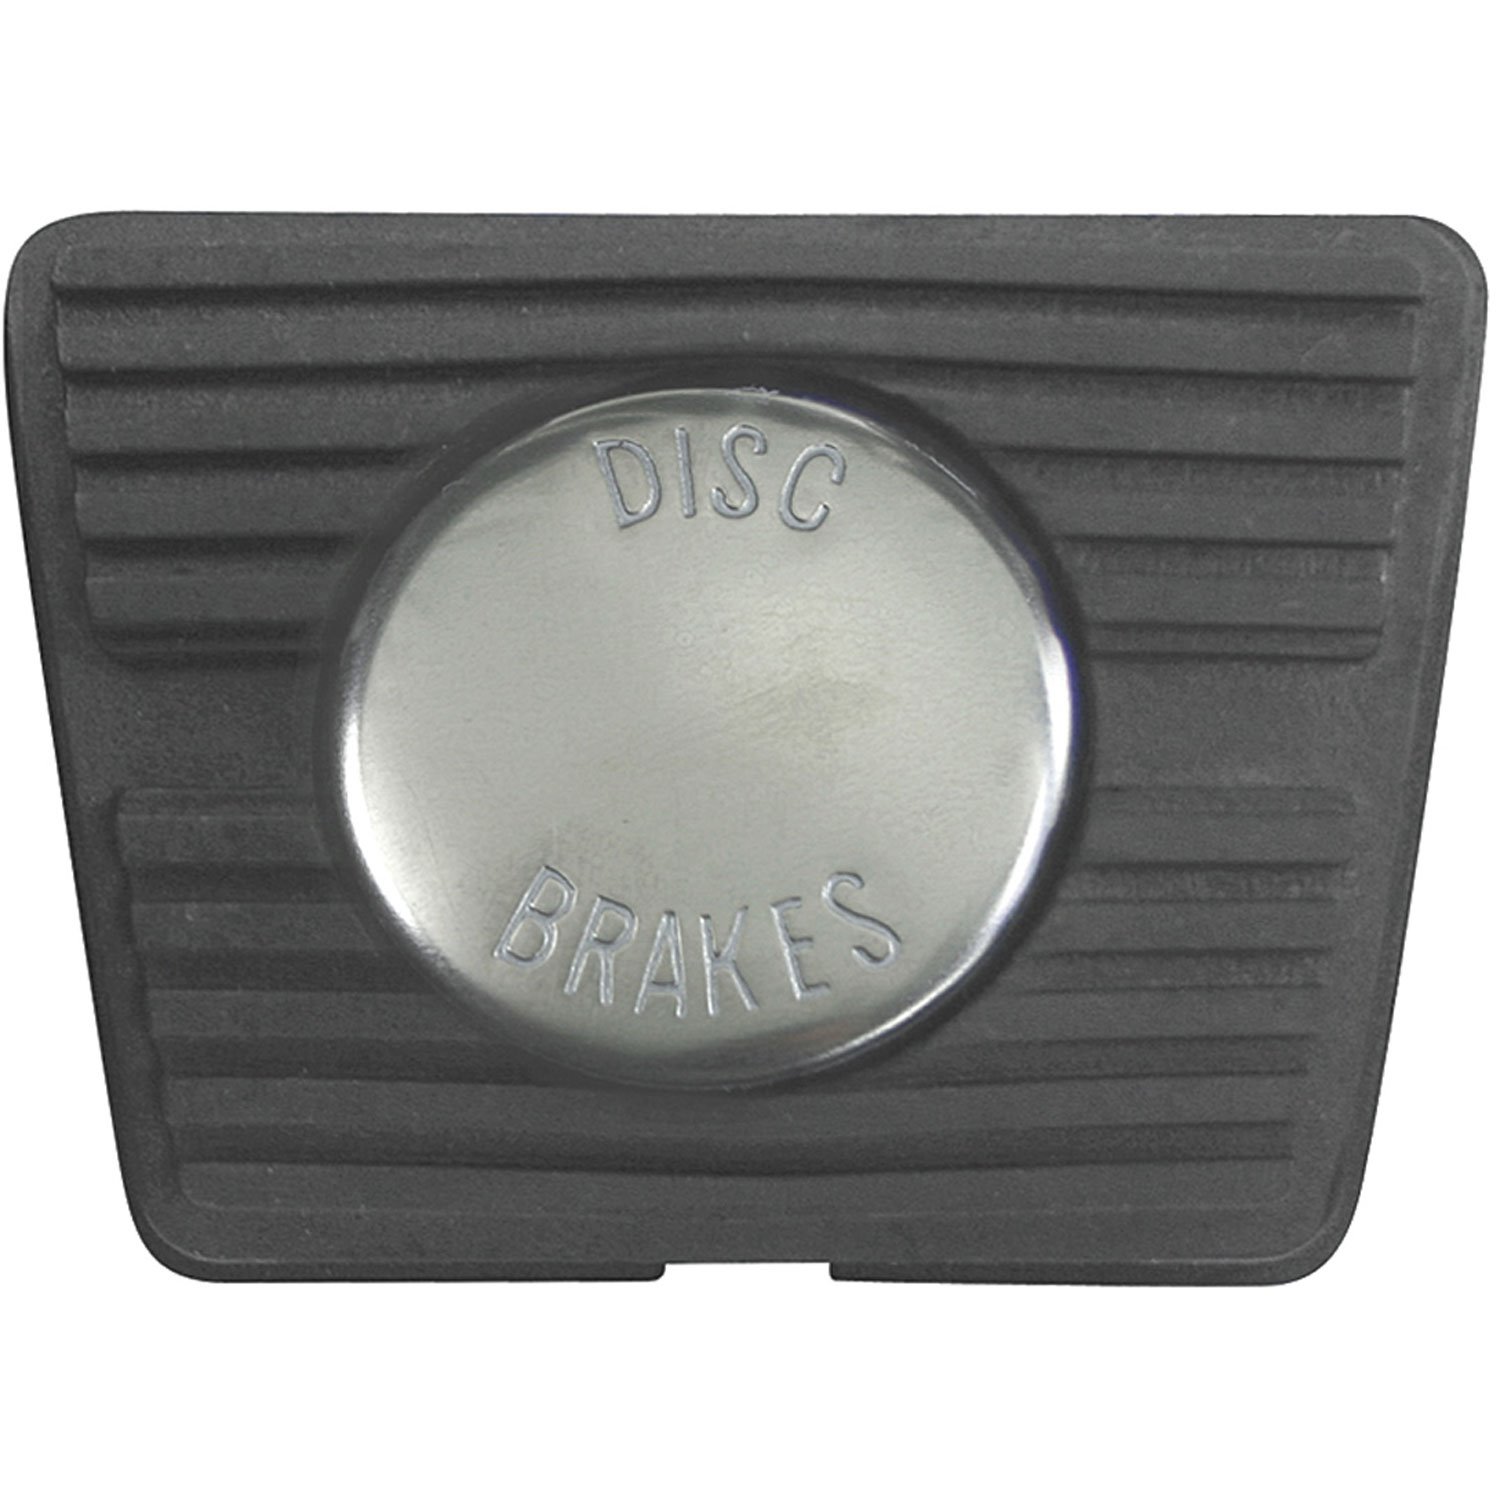 Disc Brake/Clutch Pedal Pad With Chrome Center 1967-72 Buick Skylark